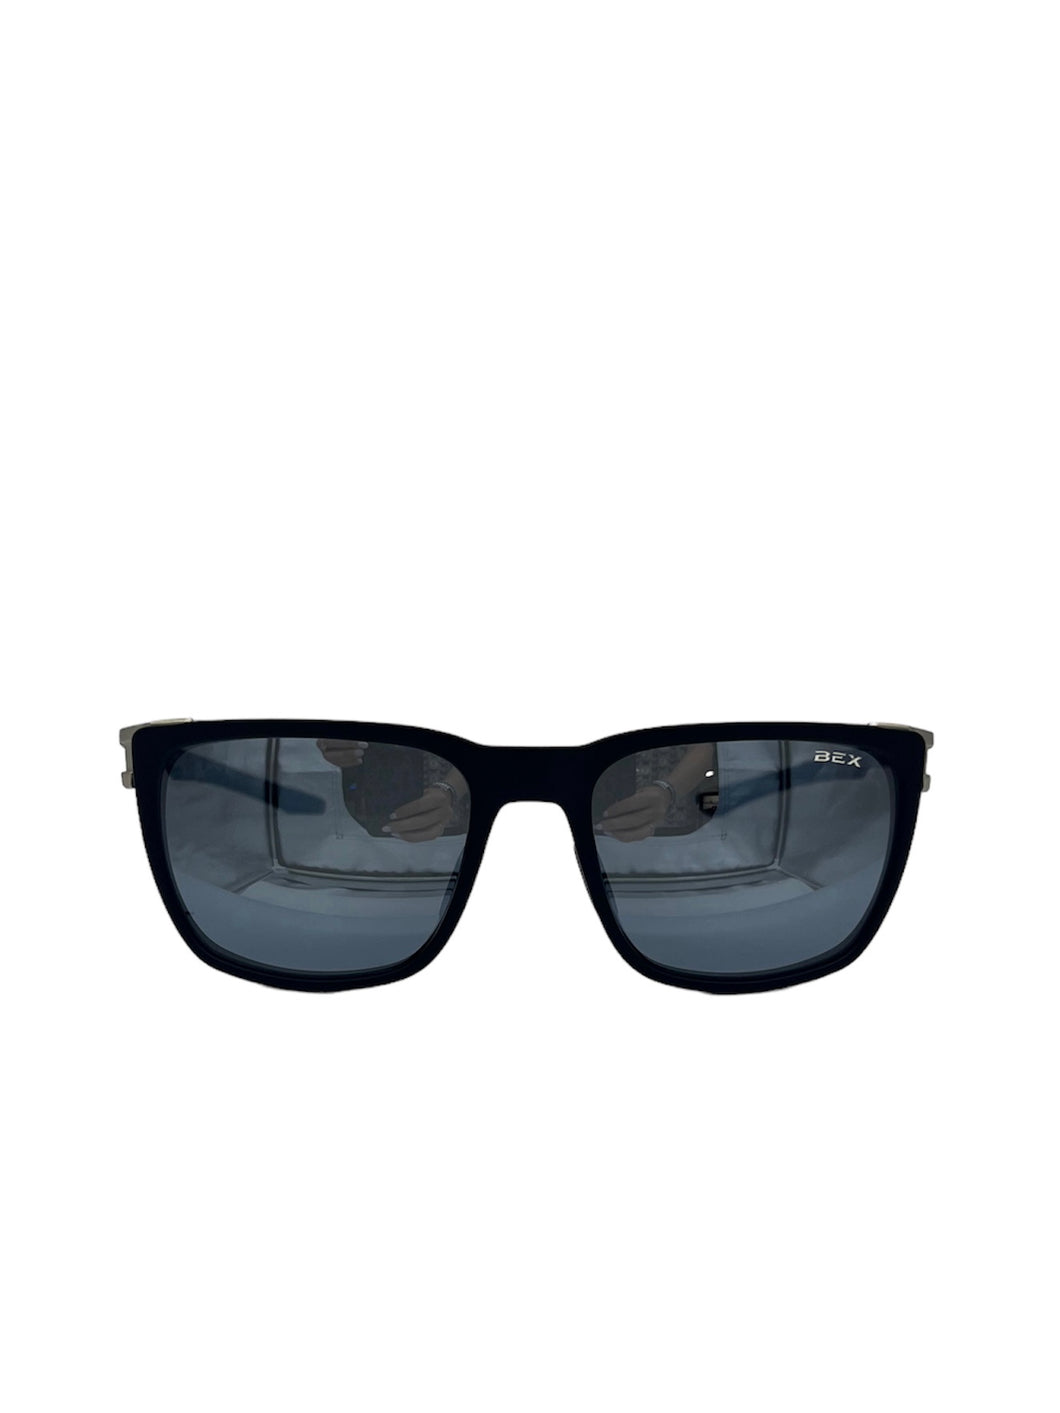 Bex Black/Grey Adams Sunglasses